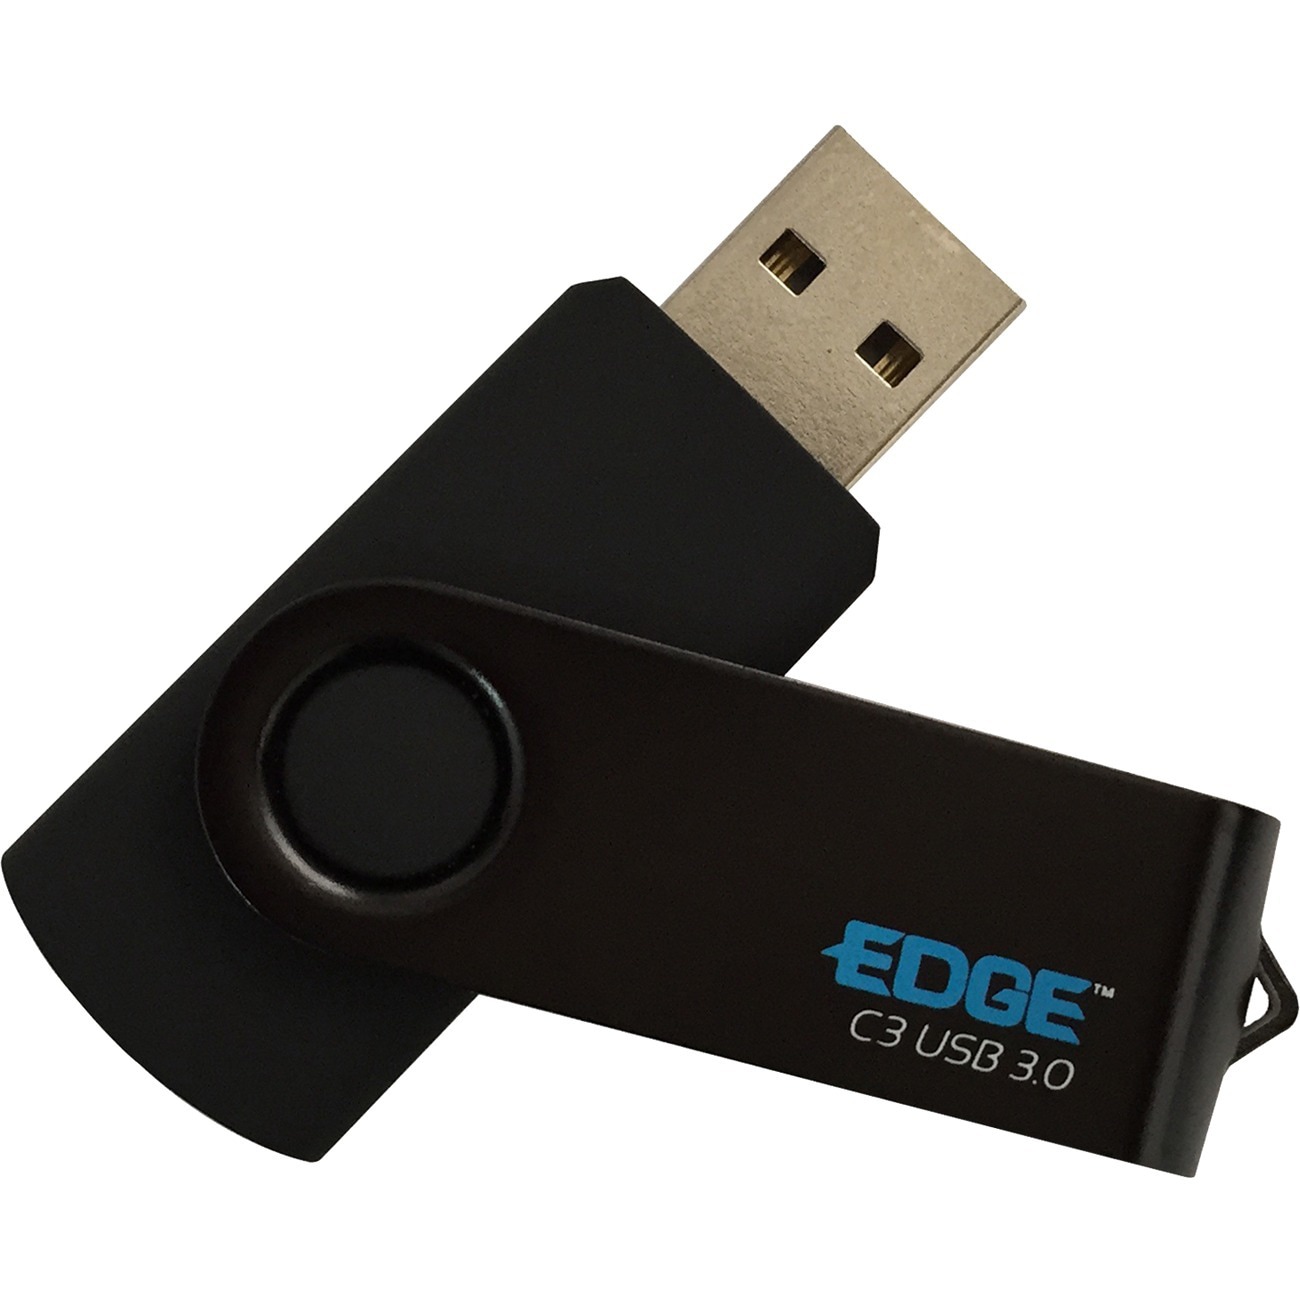 EDGE C3 - USB flash drive - 16 GB